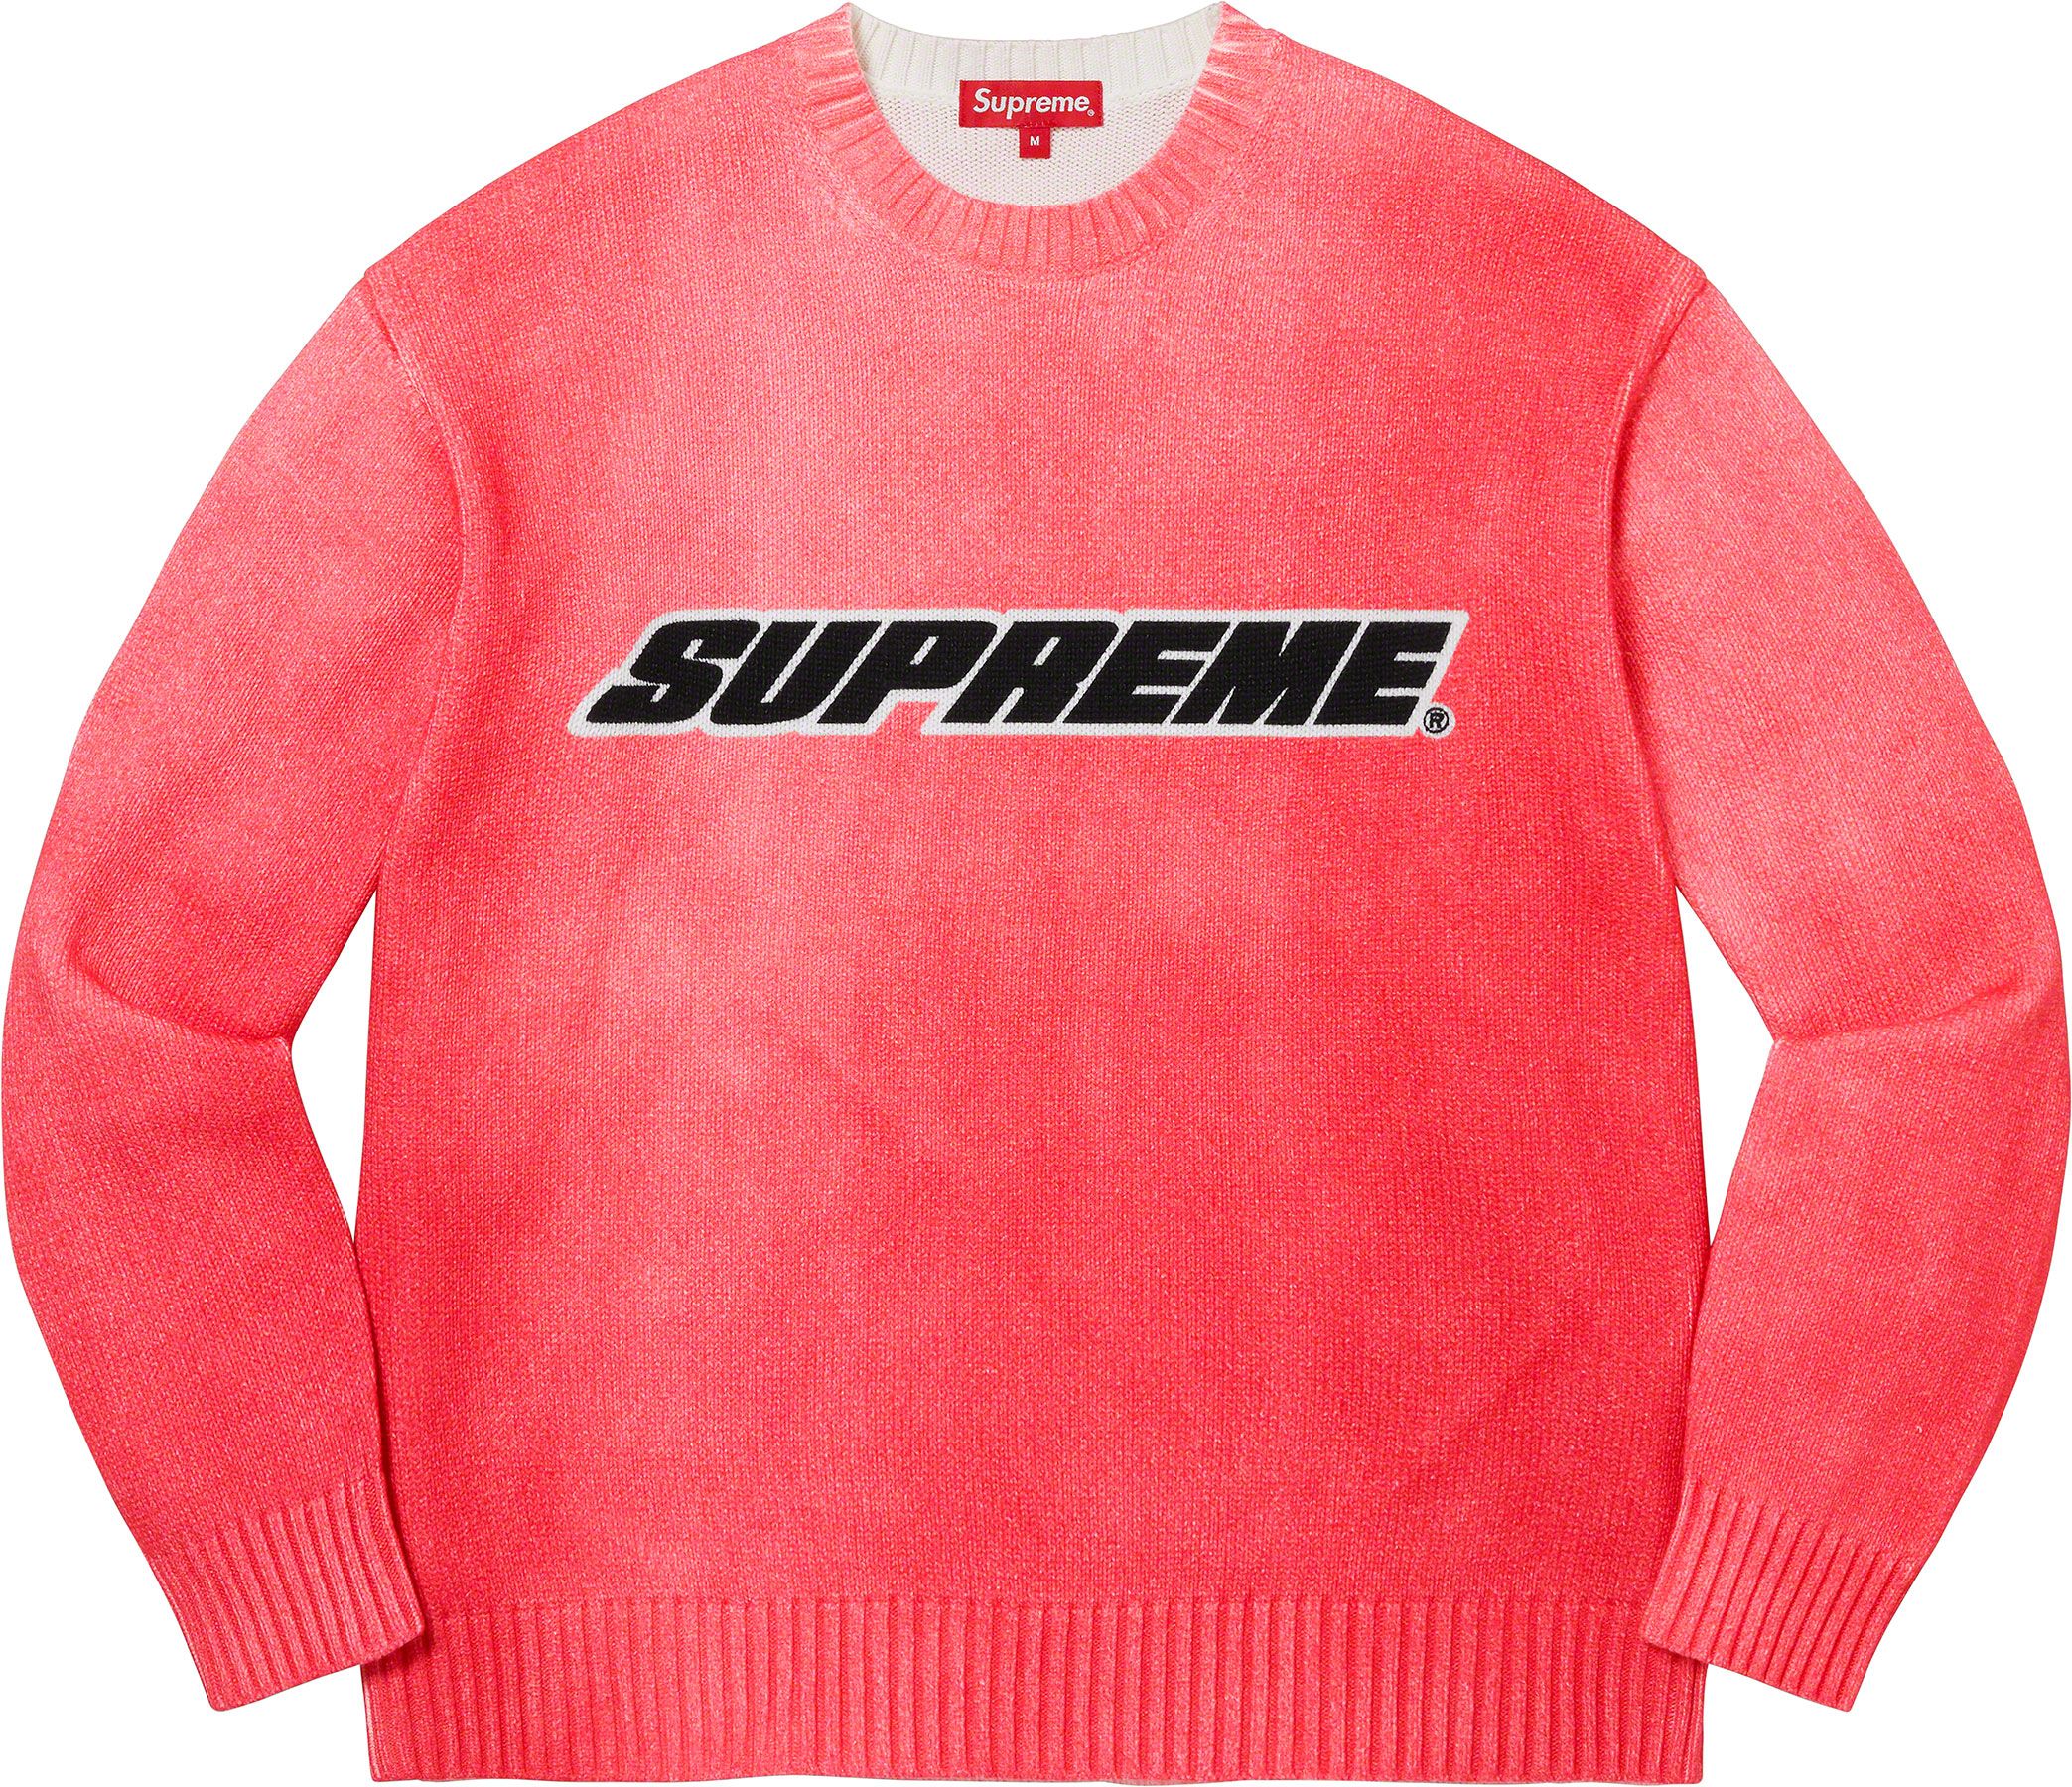 Kurt Cobain Sweater – Supreme